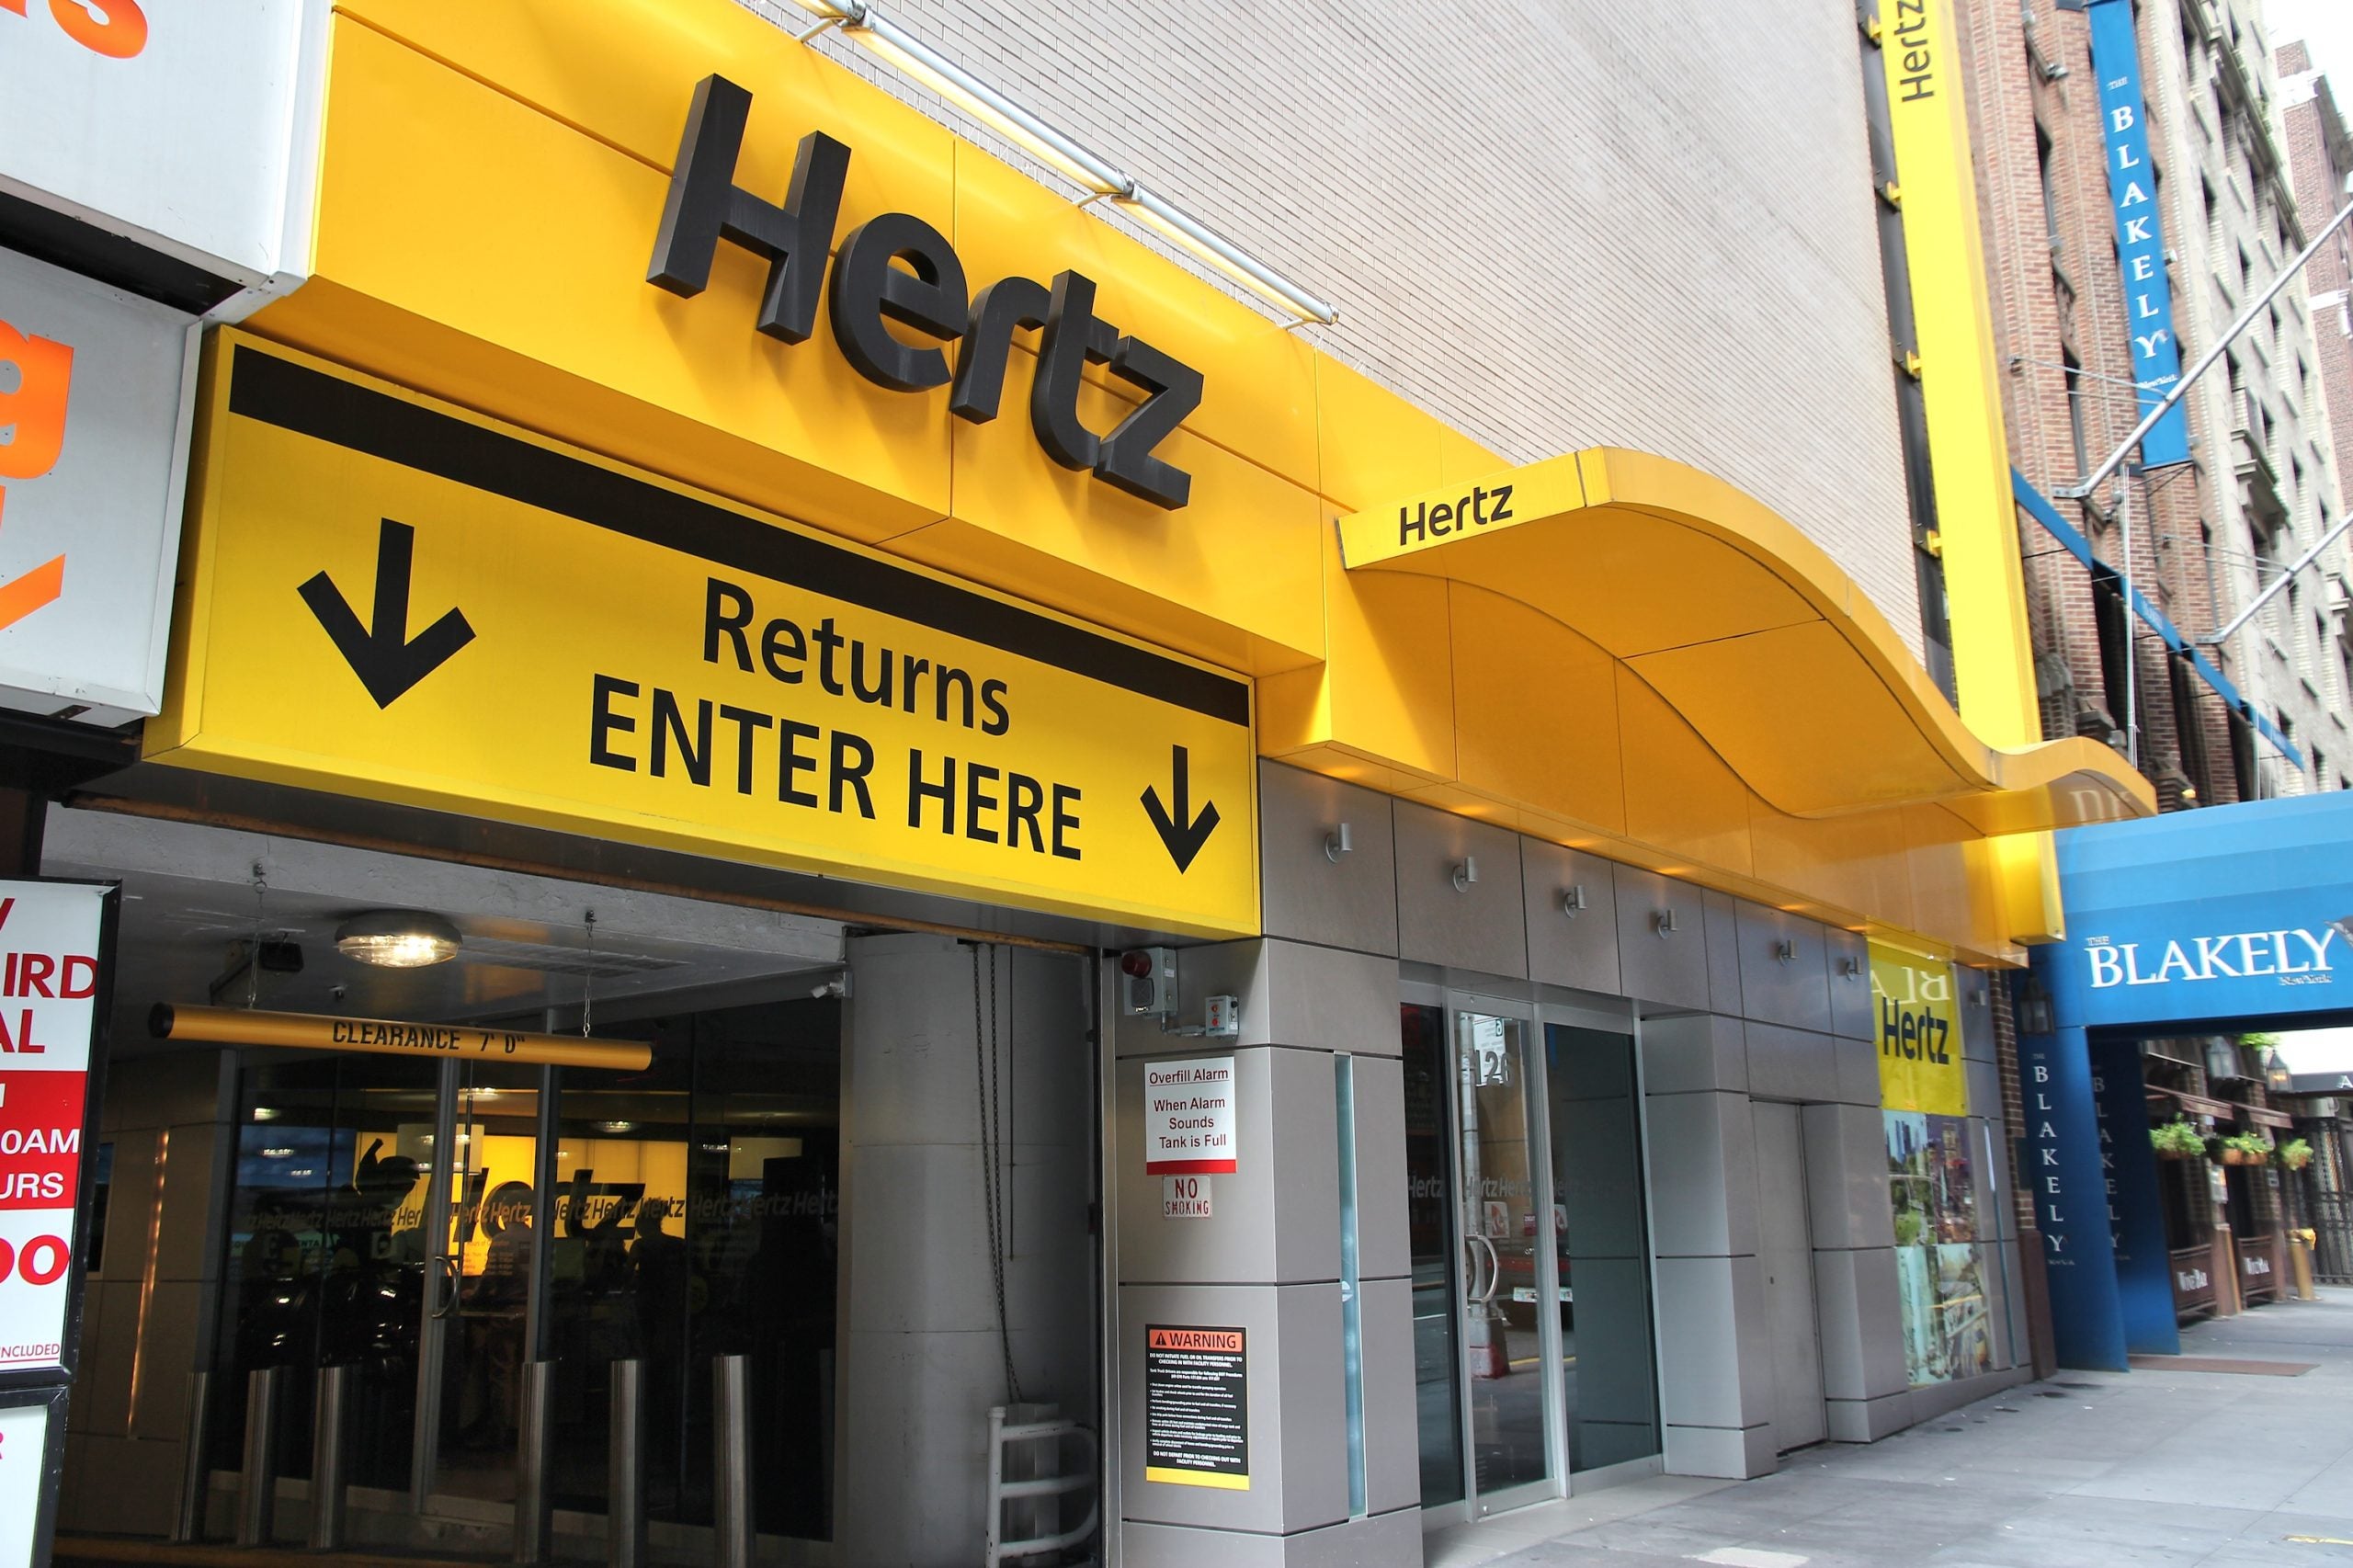 Hertz vehicle drop-off location entrance